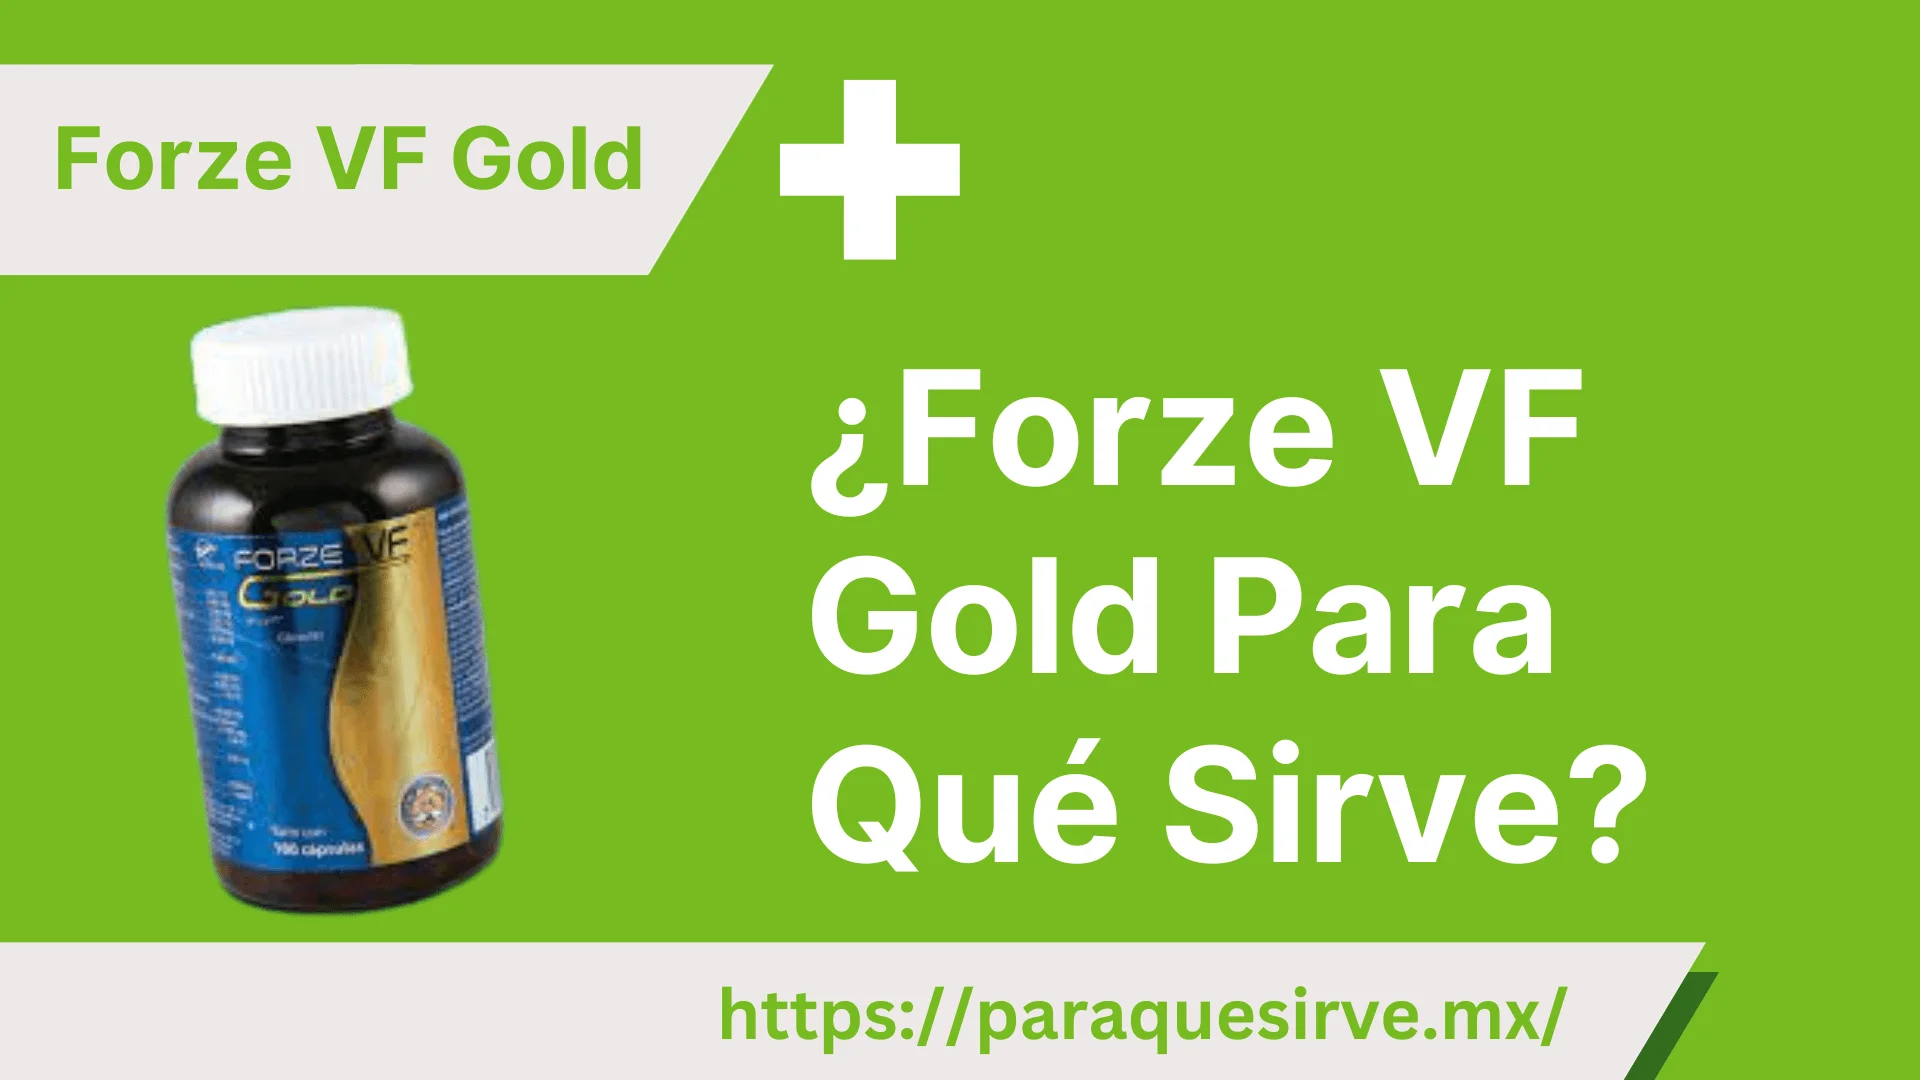 Forze VF Gold Para Qué Sirve?